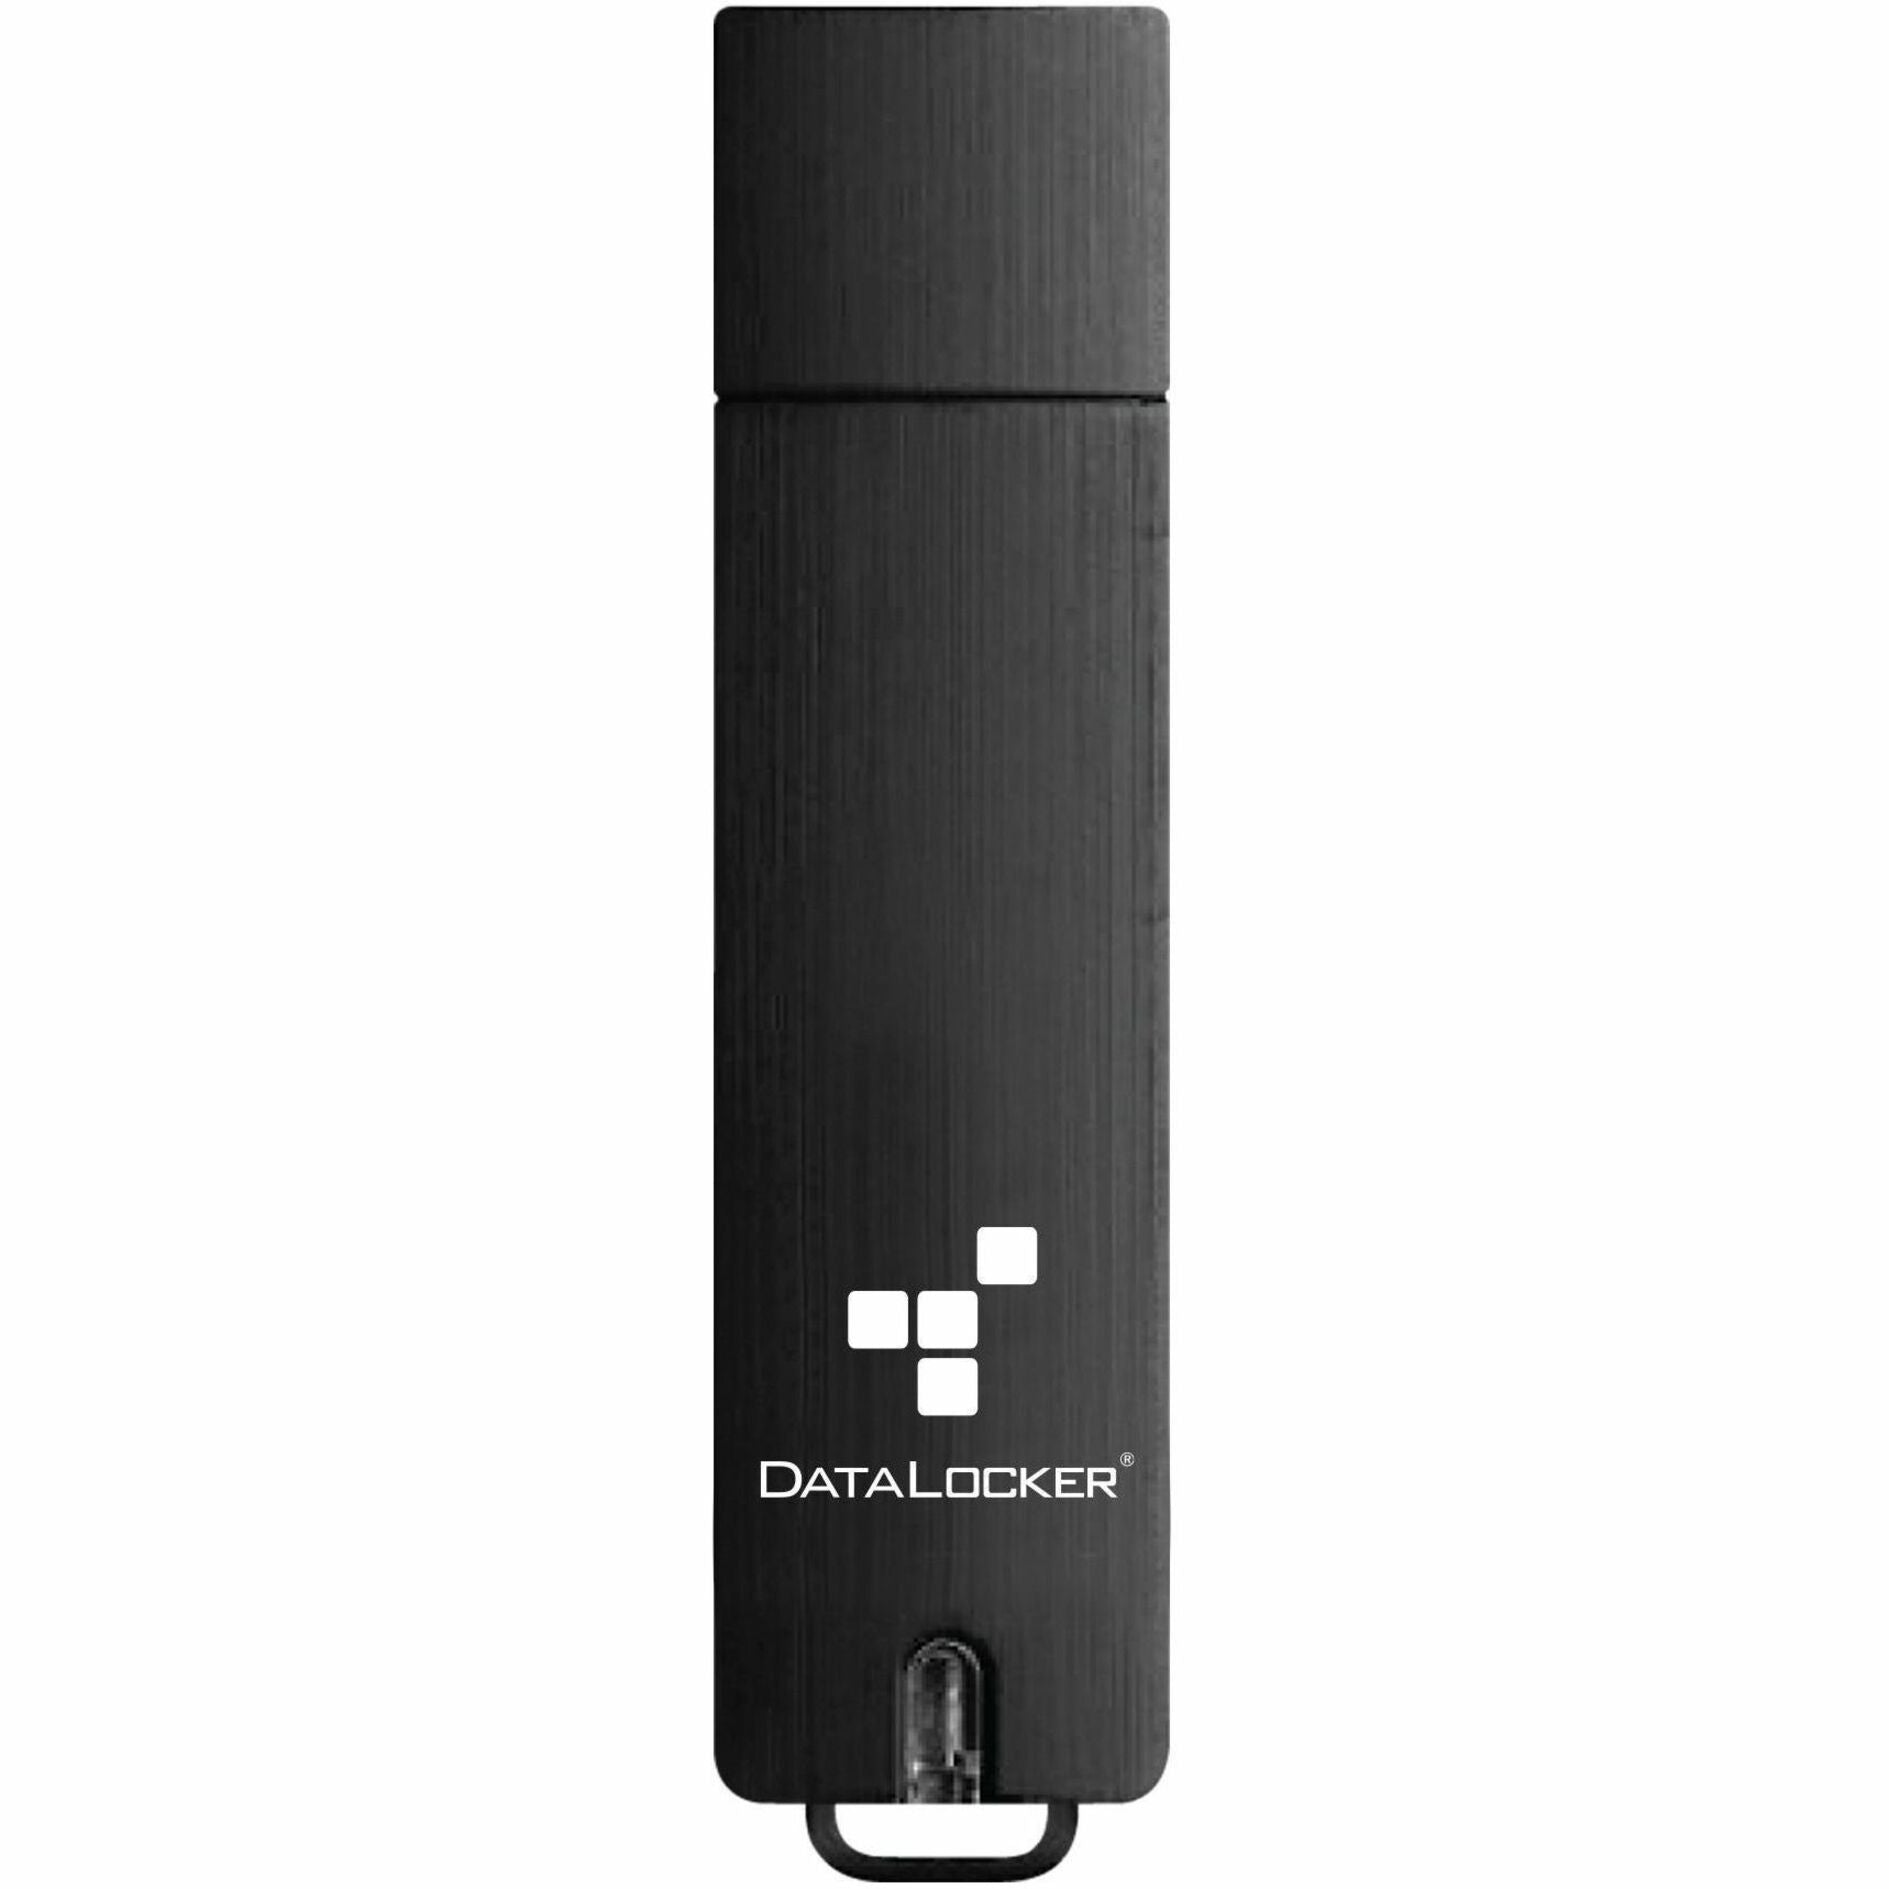 DataLocker - الرقمية القفل S5-008-FE-M - اس 5-008-فى-اى-ام Sentry - حارس 8GB - 8 جيجابايت USB - يو اس بي 3.2 - 3.2 Gen 1 - جيل 1 Type A - نوع أ Flash Drive - محرك فلاش Portable - محمول Secure - آمن Storage Solution - حل تخزين